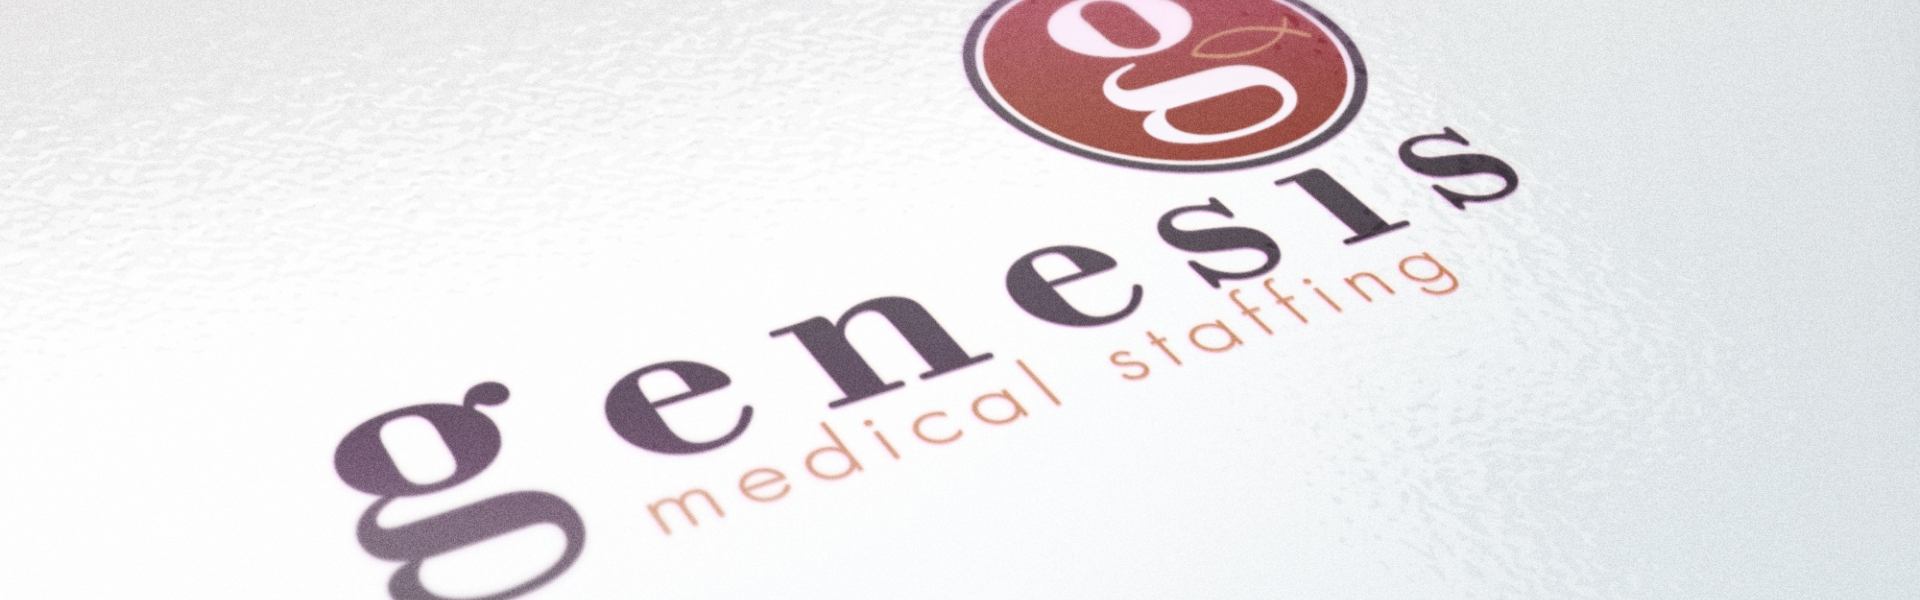 Genesis Medical Staffing Brand Development